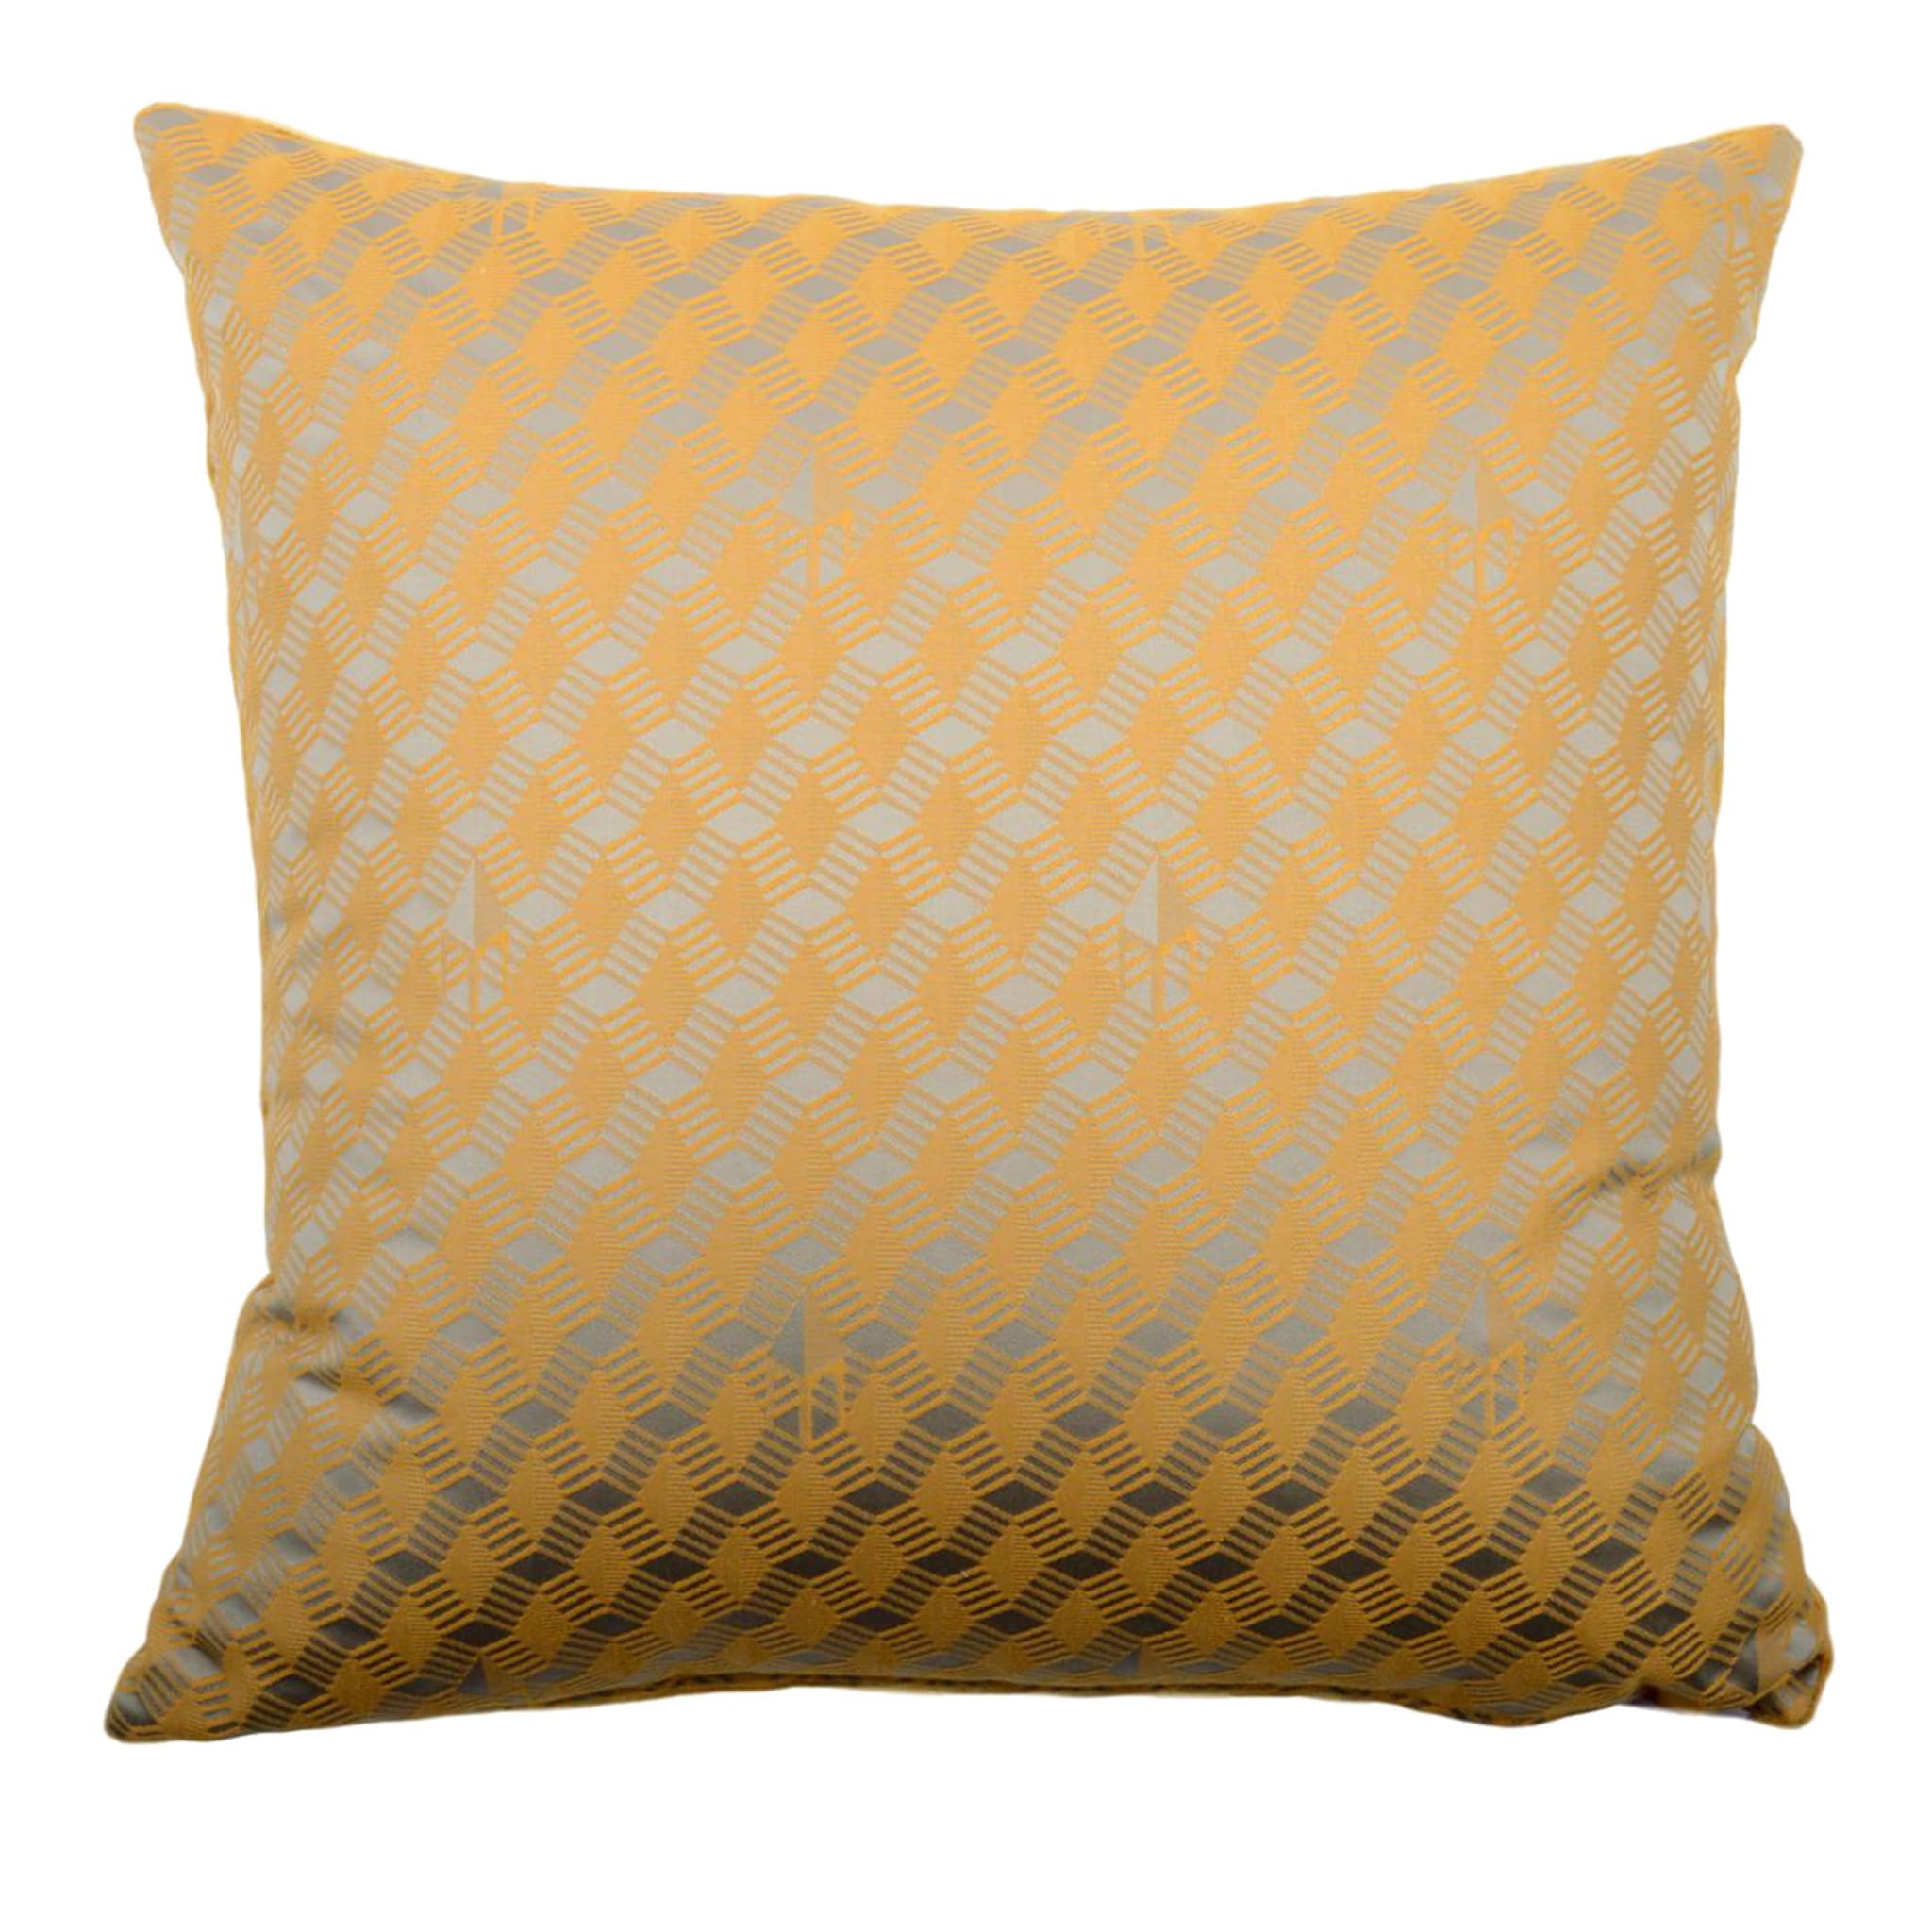 Gold Carrè Cushion in architectural jacquard fabric - Main view